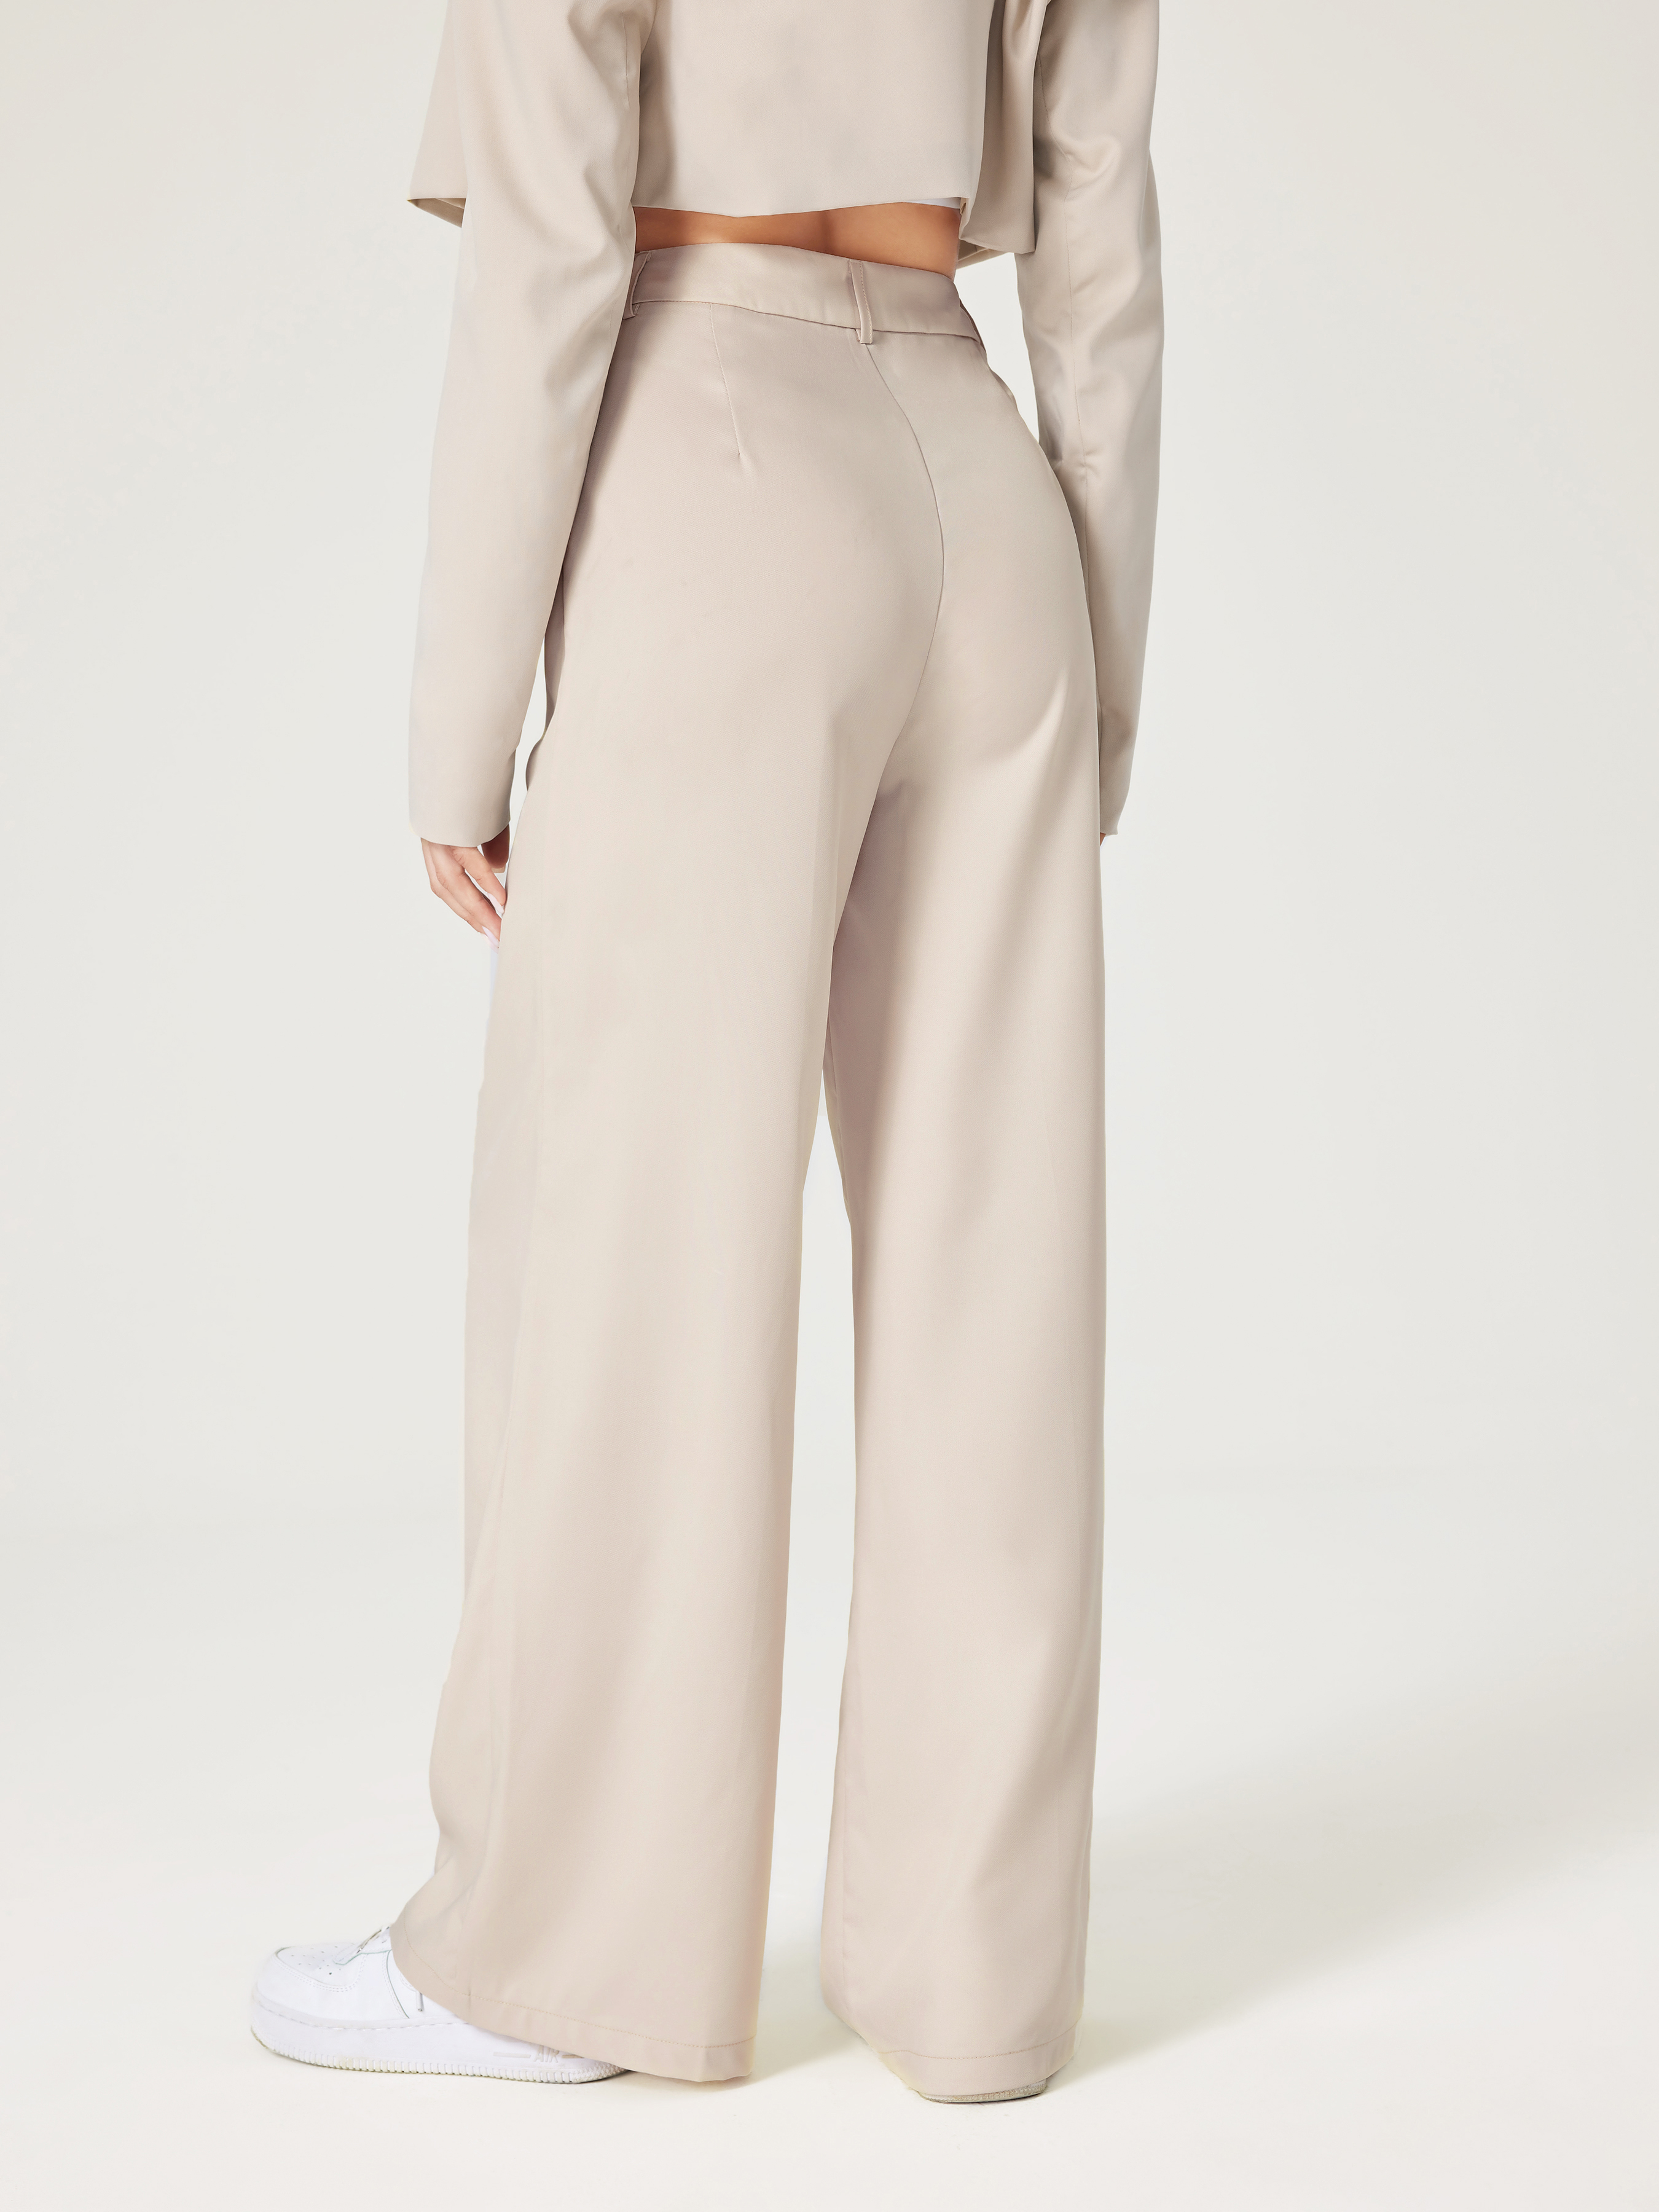 SBYOJLPB Fashion Women Plus Size Solid Button Zipper Casual Pants Calf- Length Trousers White 10(XL) 